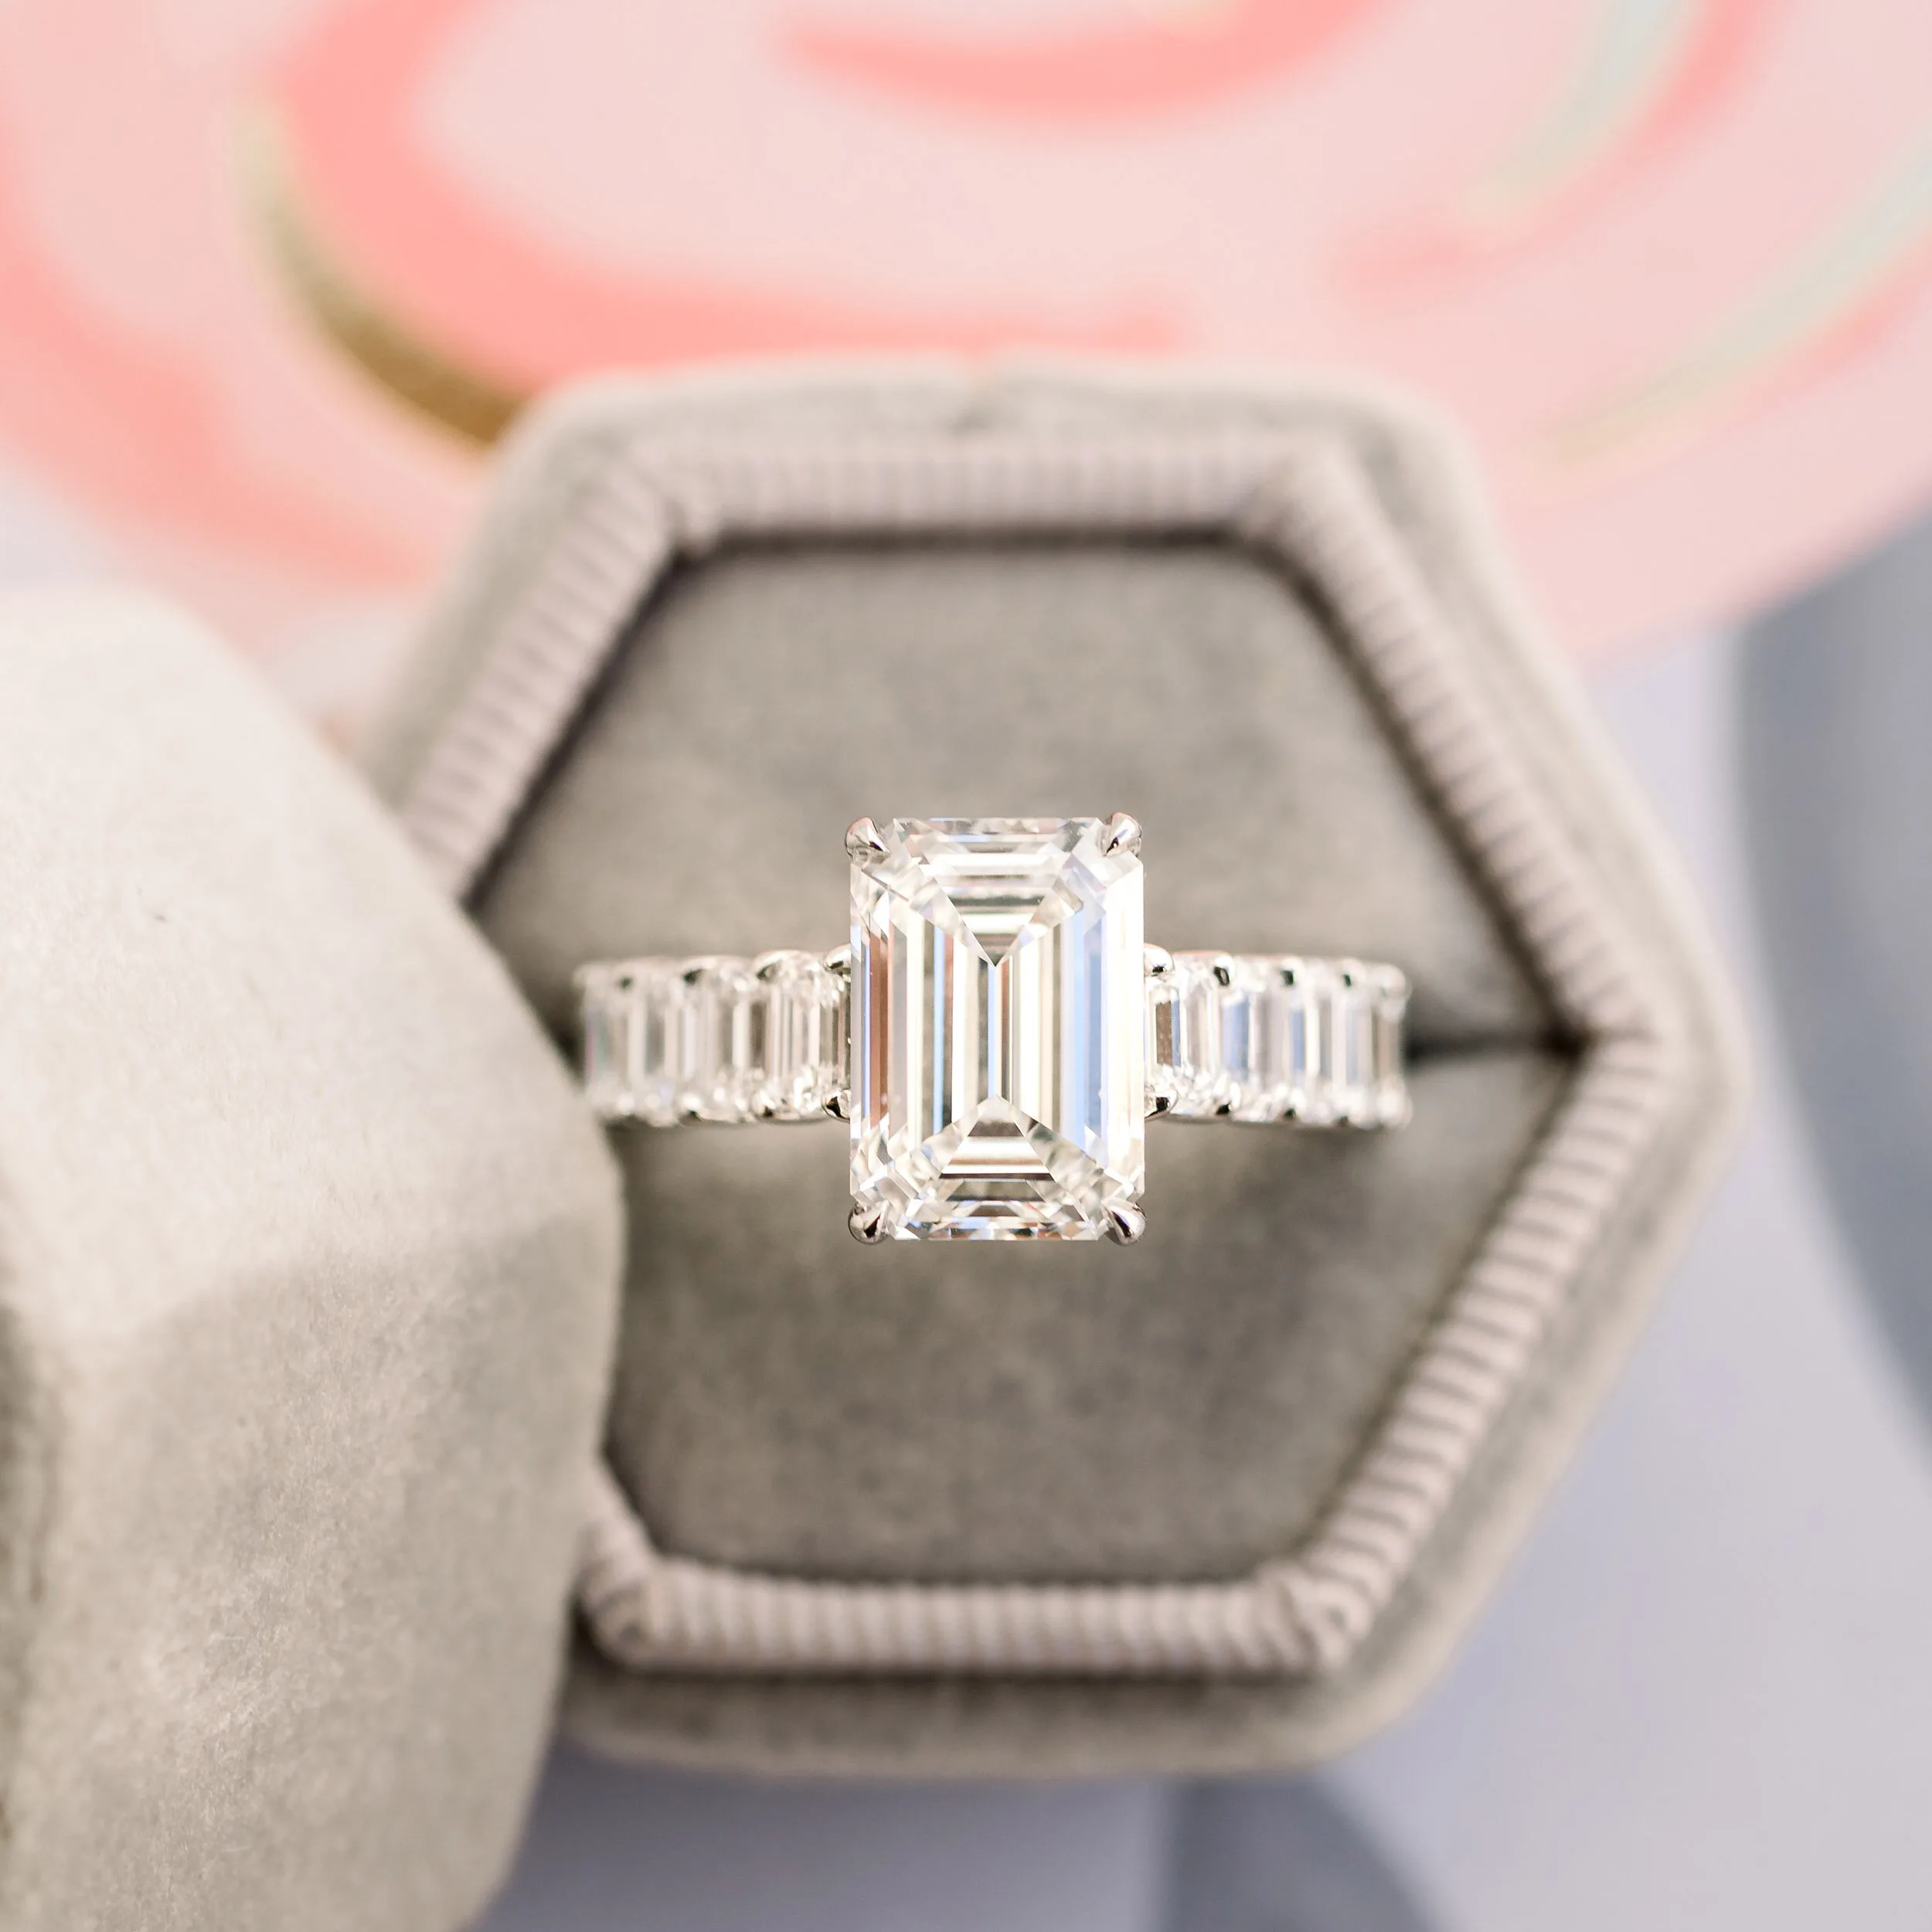 5-ct-custom-emerald-cut-engagement-ring-with-emerald-diamonds-on-the-band-platinum-ada-diamonds-design-ad-178_1629832281617-C5TLOXW7EN6GHIOL6EXK